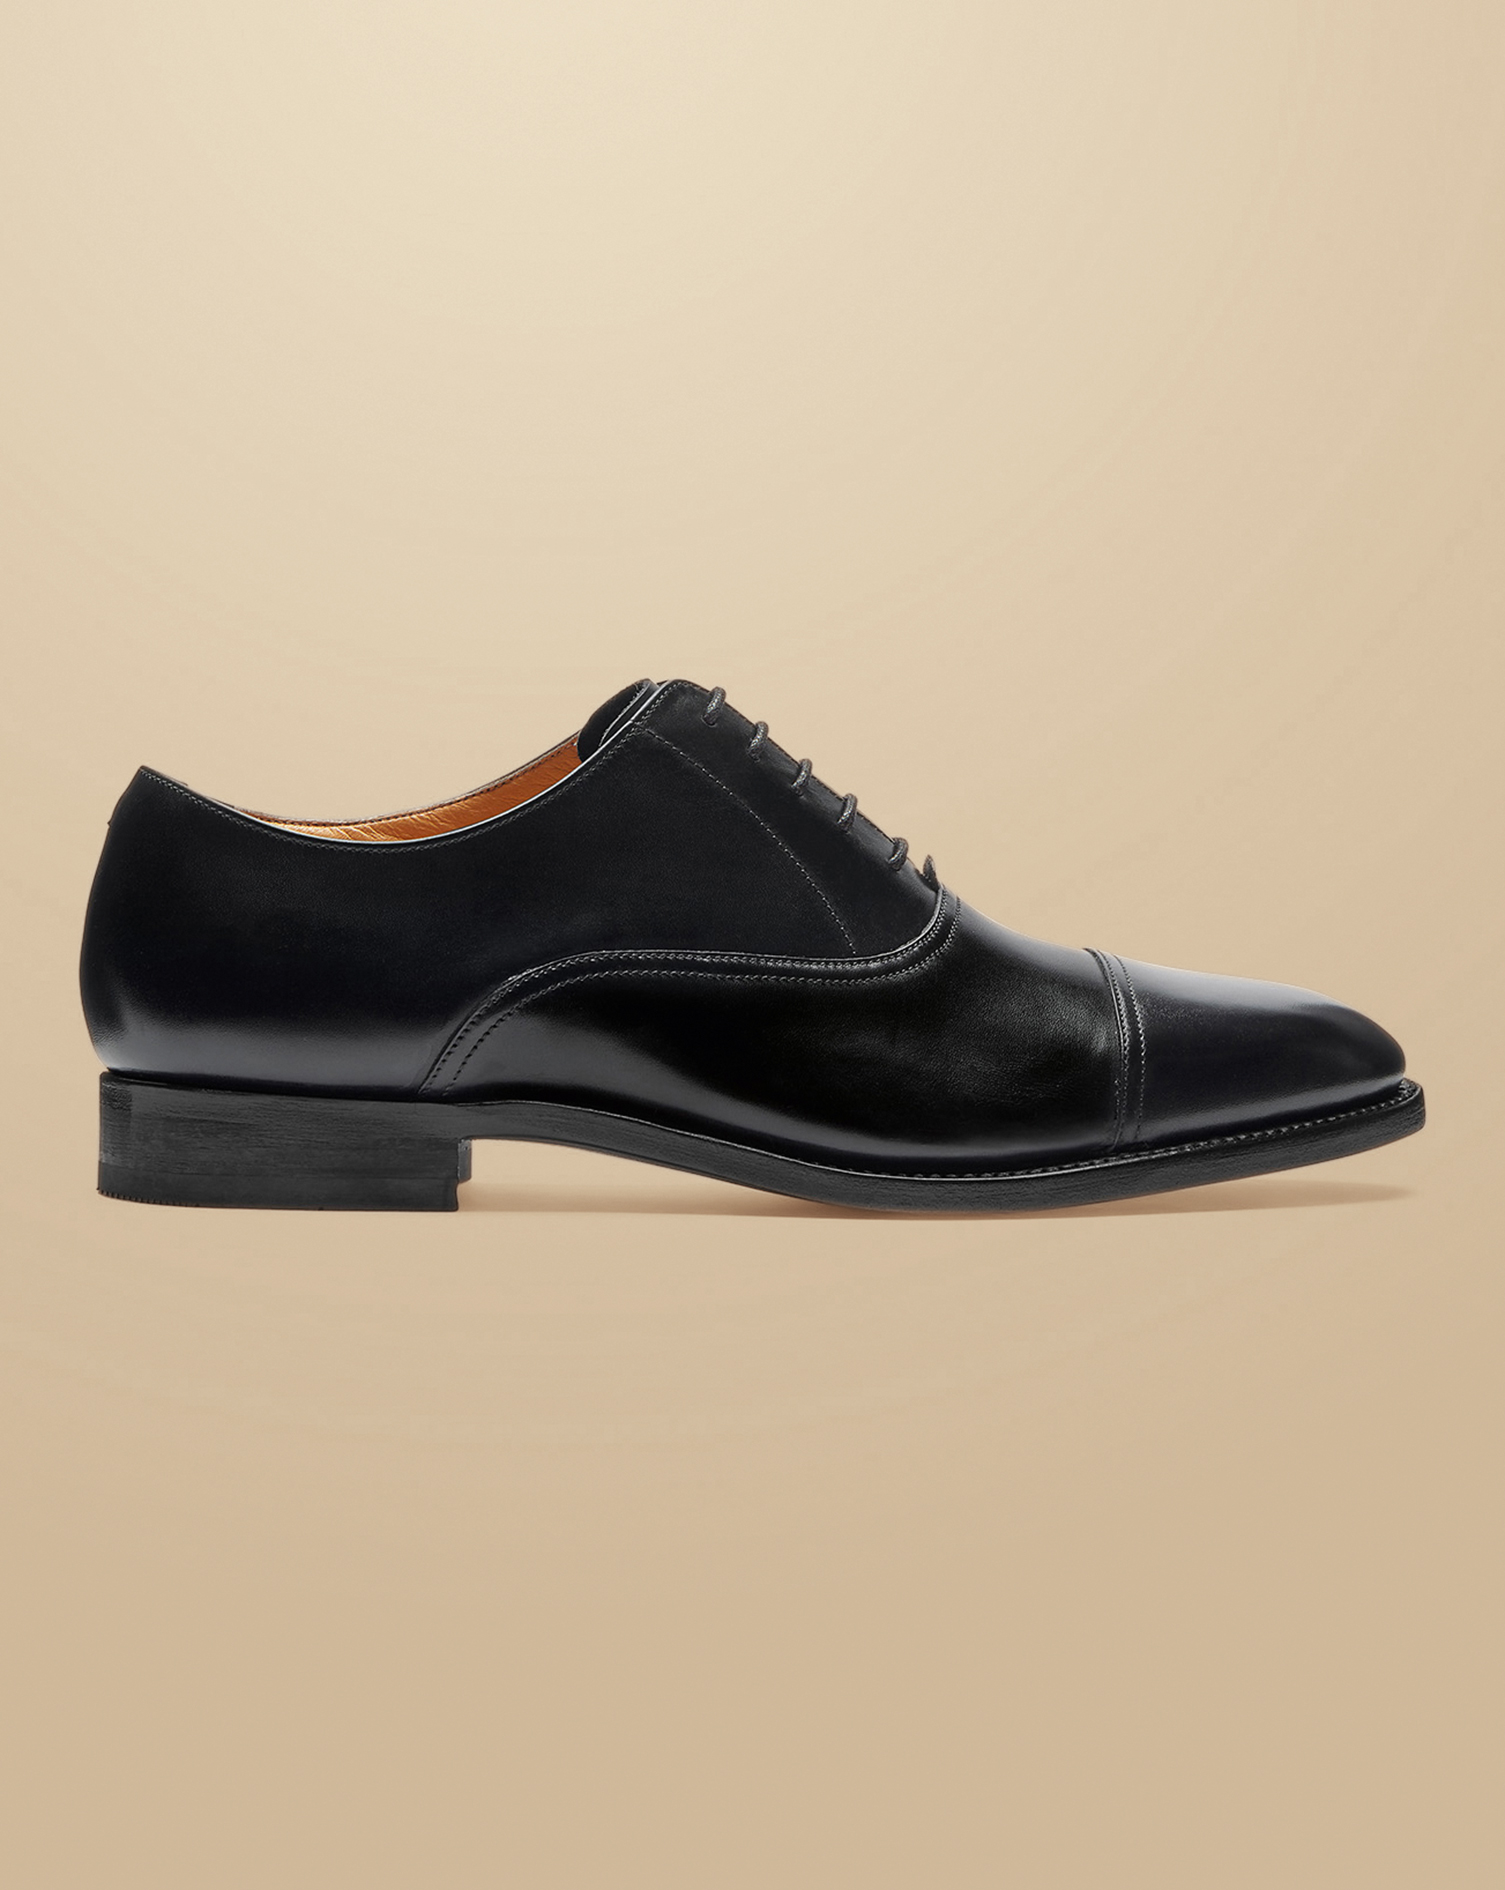 Men's Charles Tyrwhitt Oxford Shoes - Black Size 11 Leather
